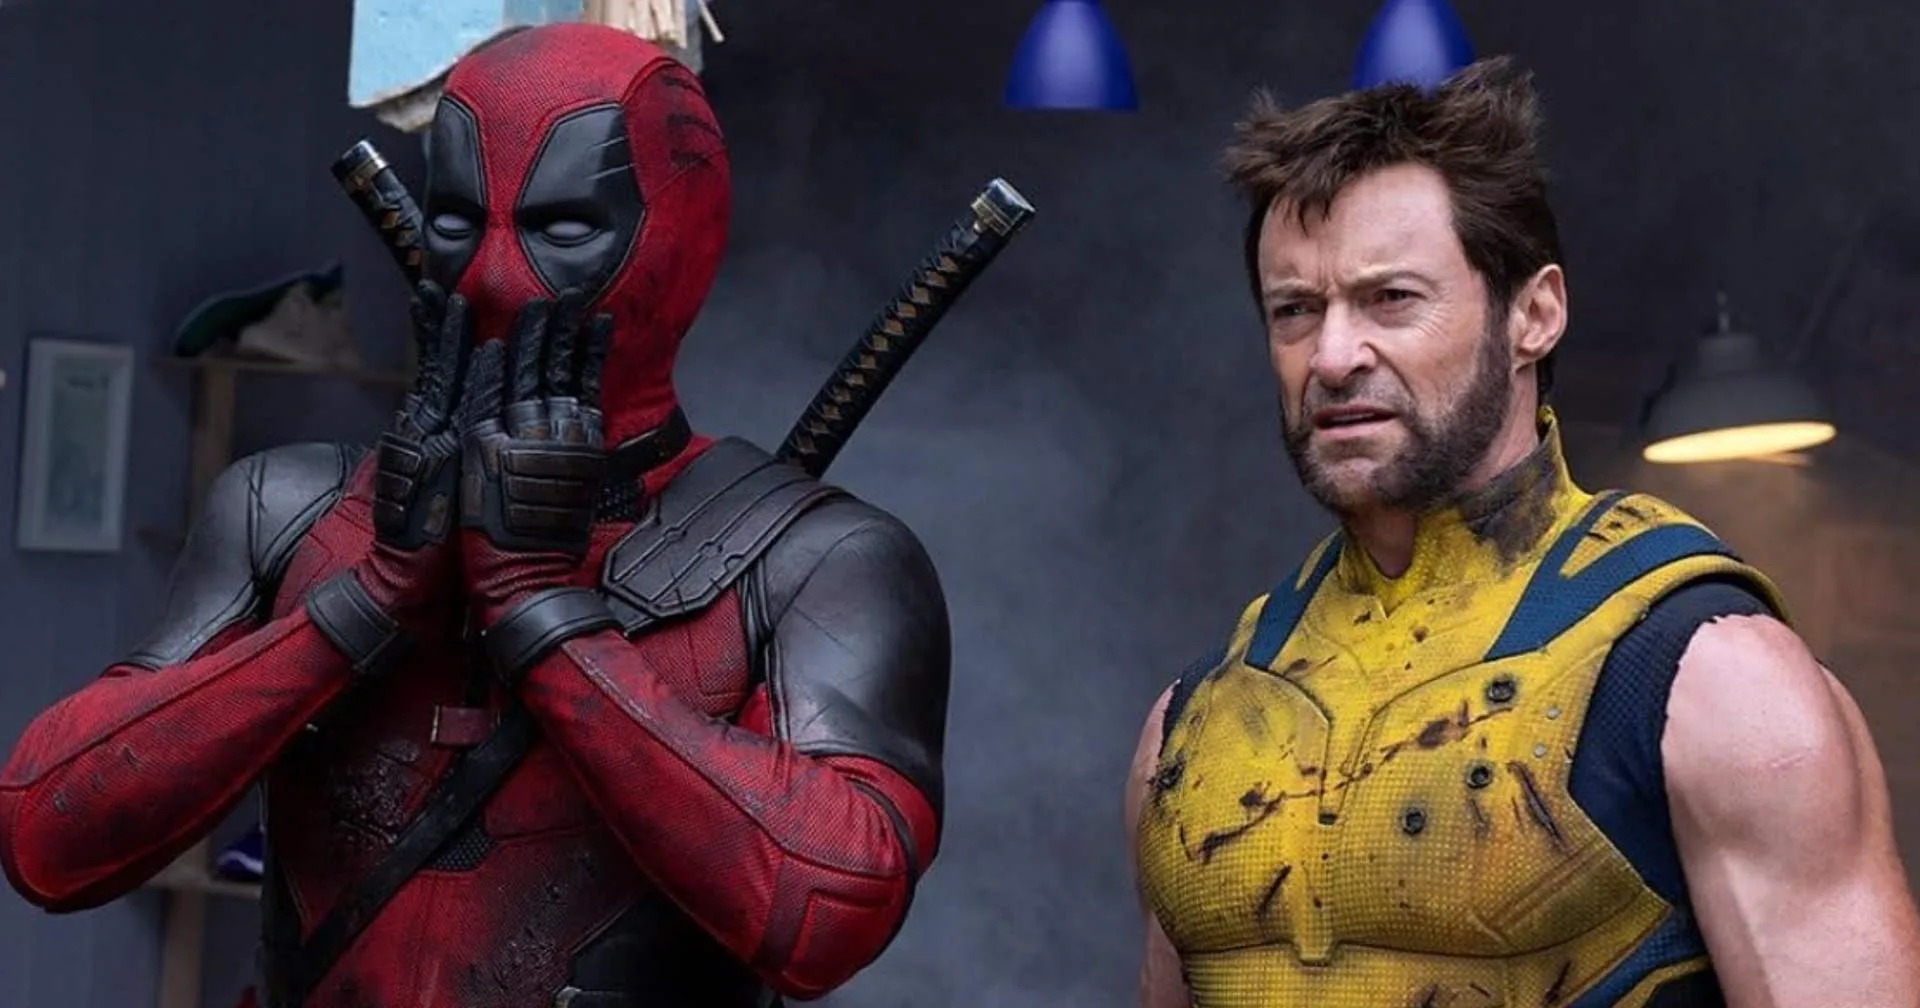 18+! Público terá que mostrar RG para ver "Deadpool & Wolverine"